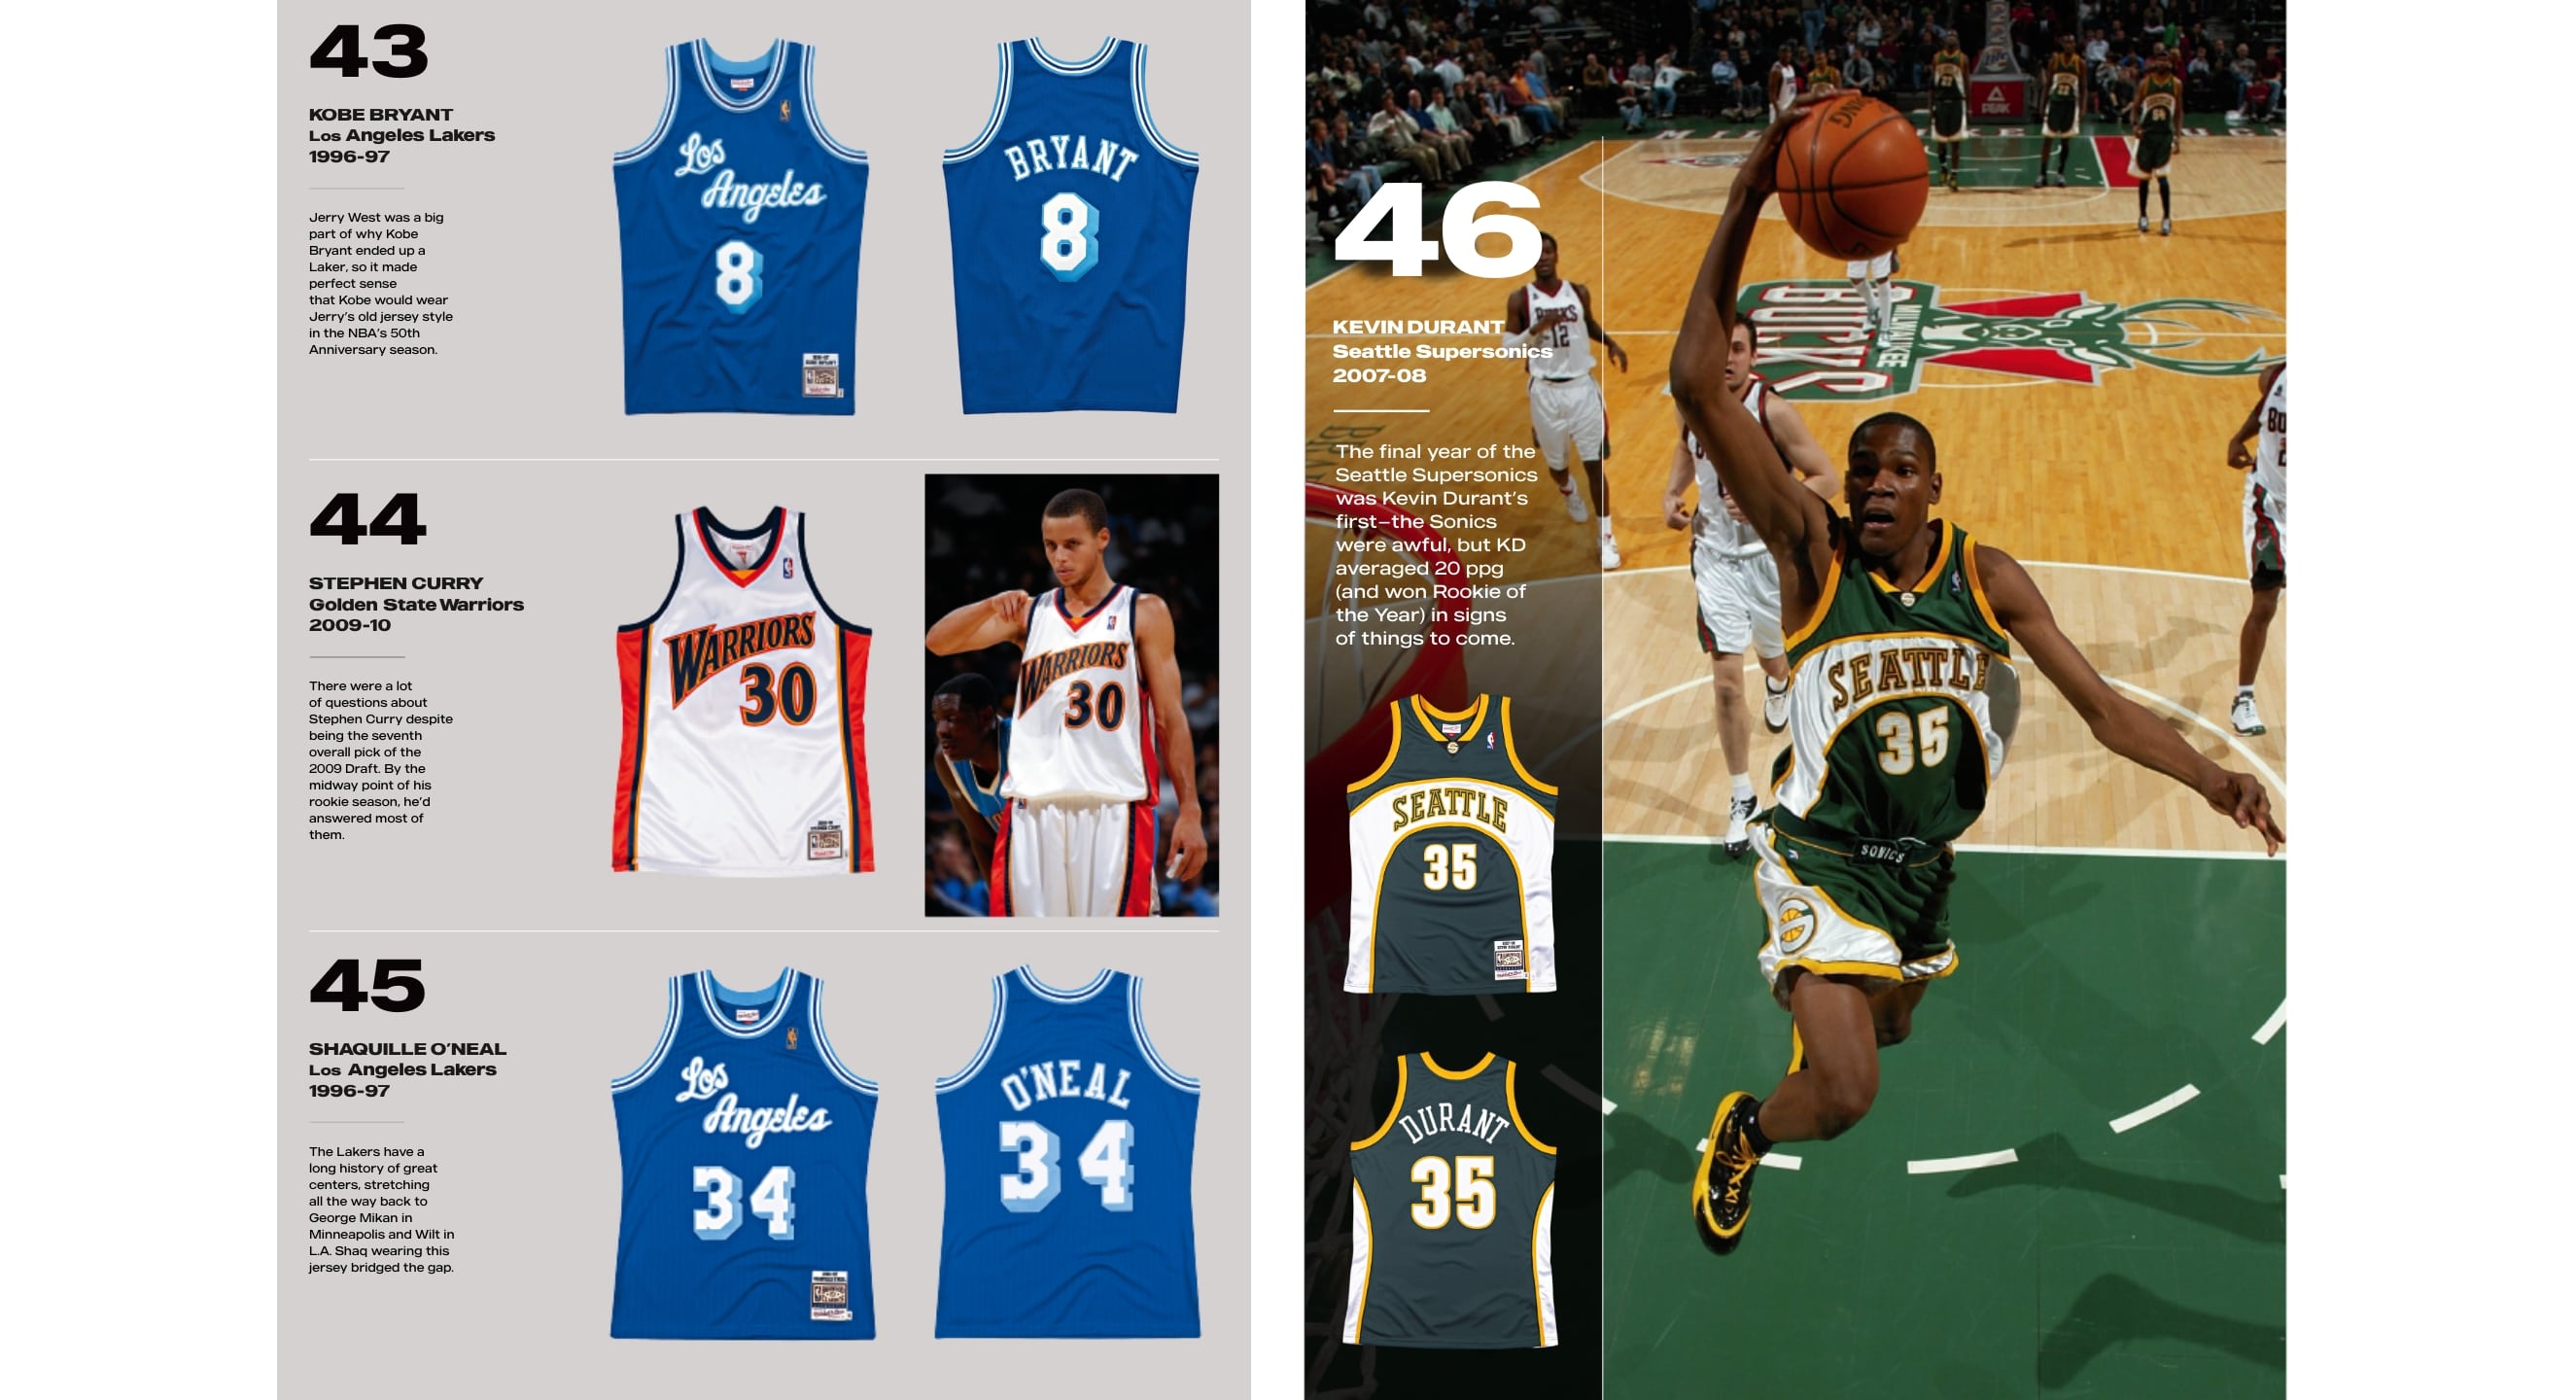 #43 Kobe Bryant - #44 Stephen Curry - #45 Shaq - #46 Kevin Durant